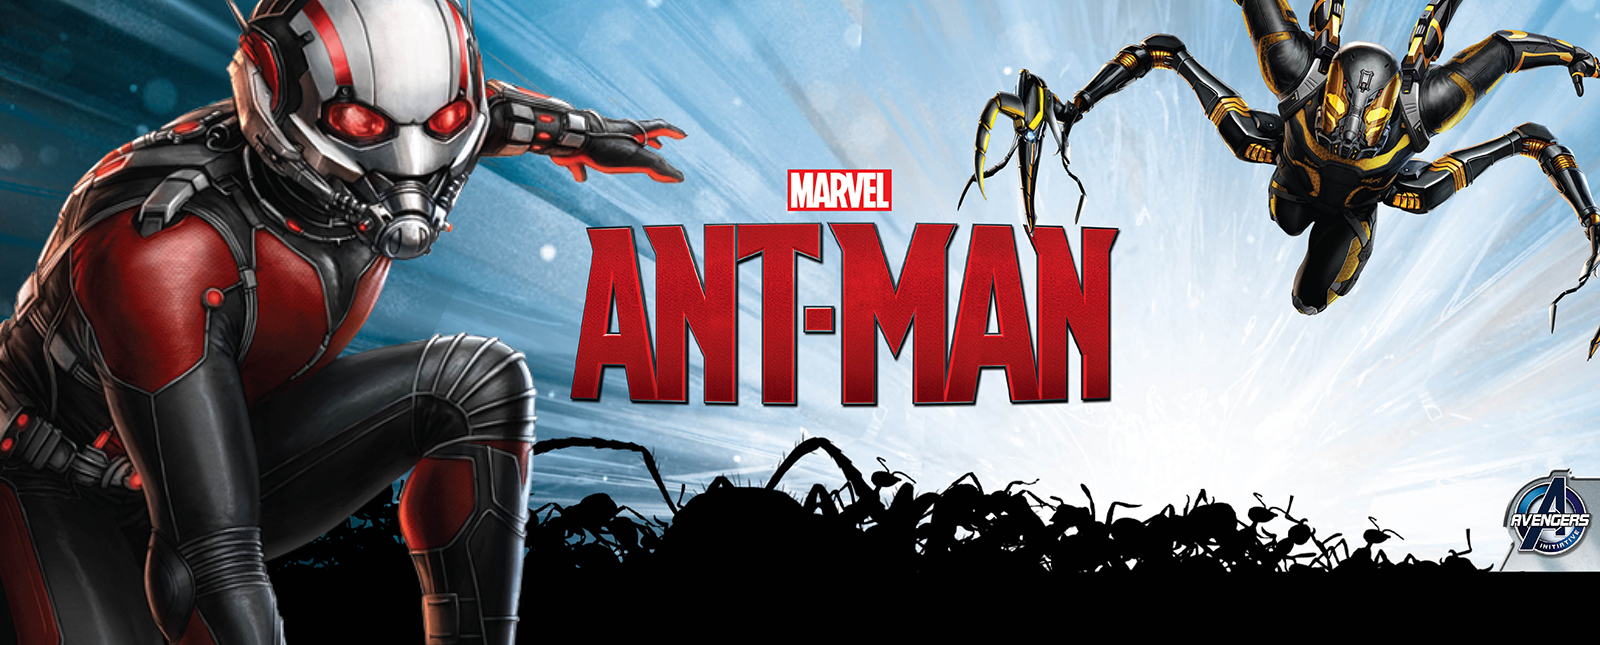 ANT-MAN - Visuel Large bandeau Marvel 2015 fourmi - Go with the Blog